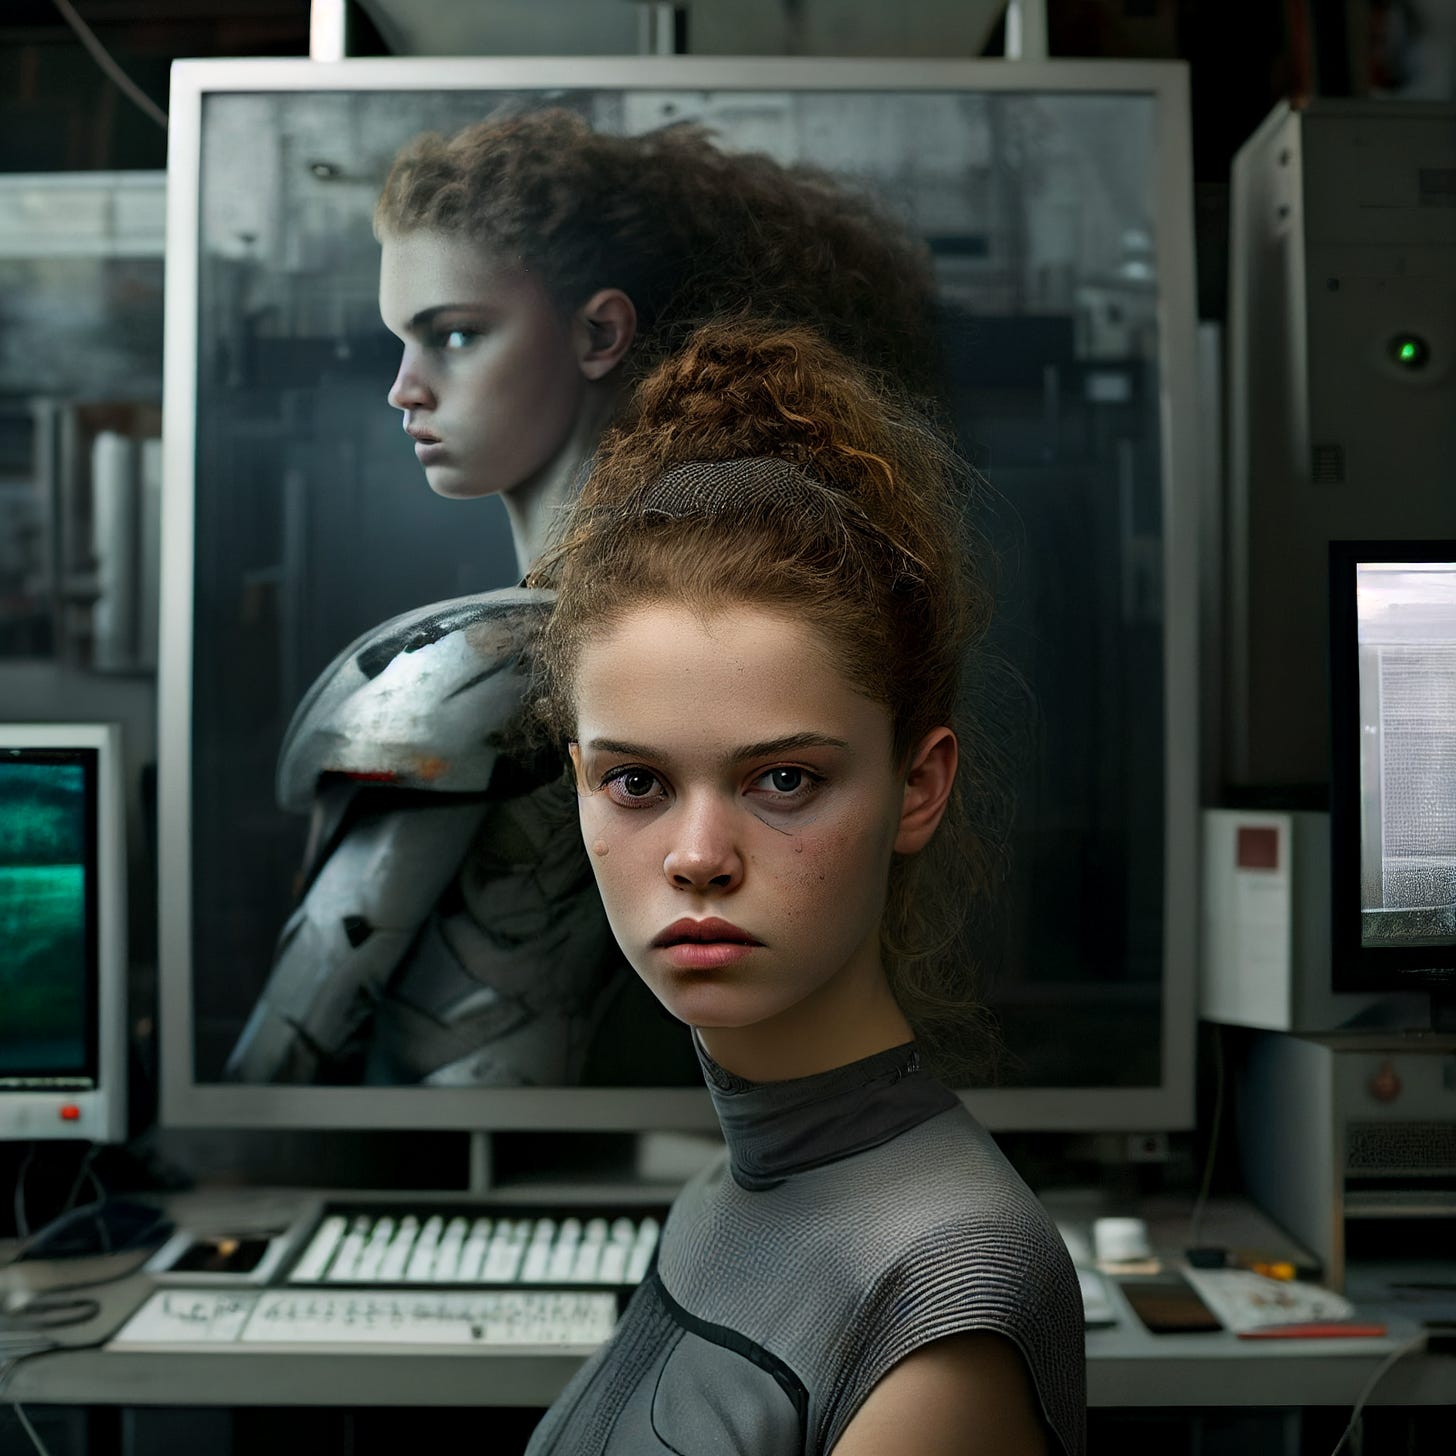 teenage AI artist in futuristic studio by Annie Leibovitz